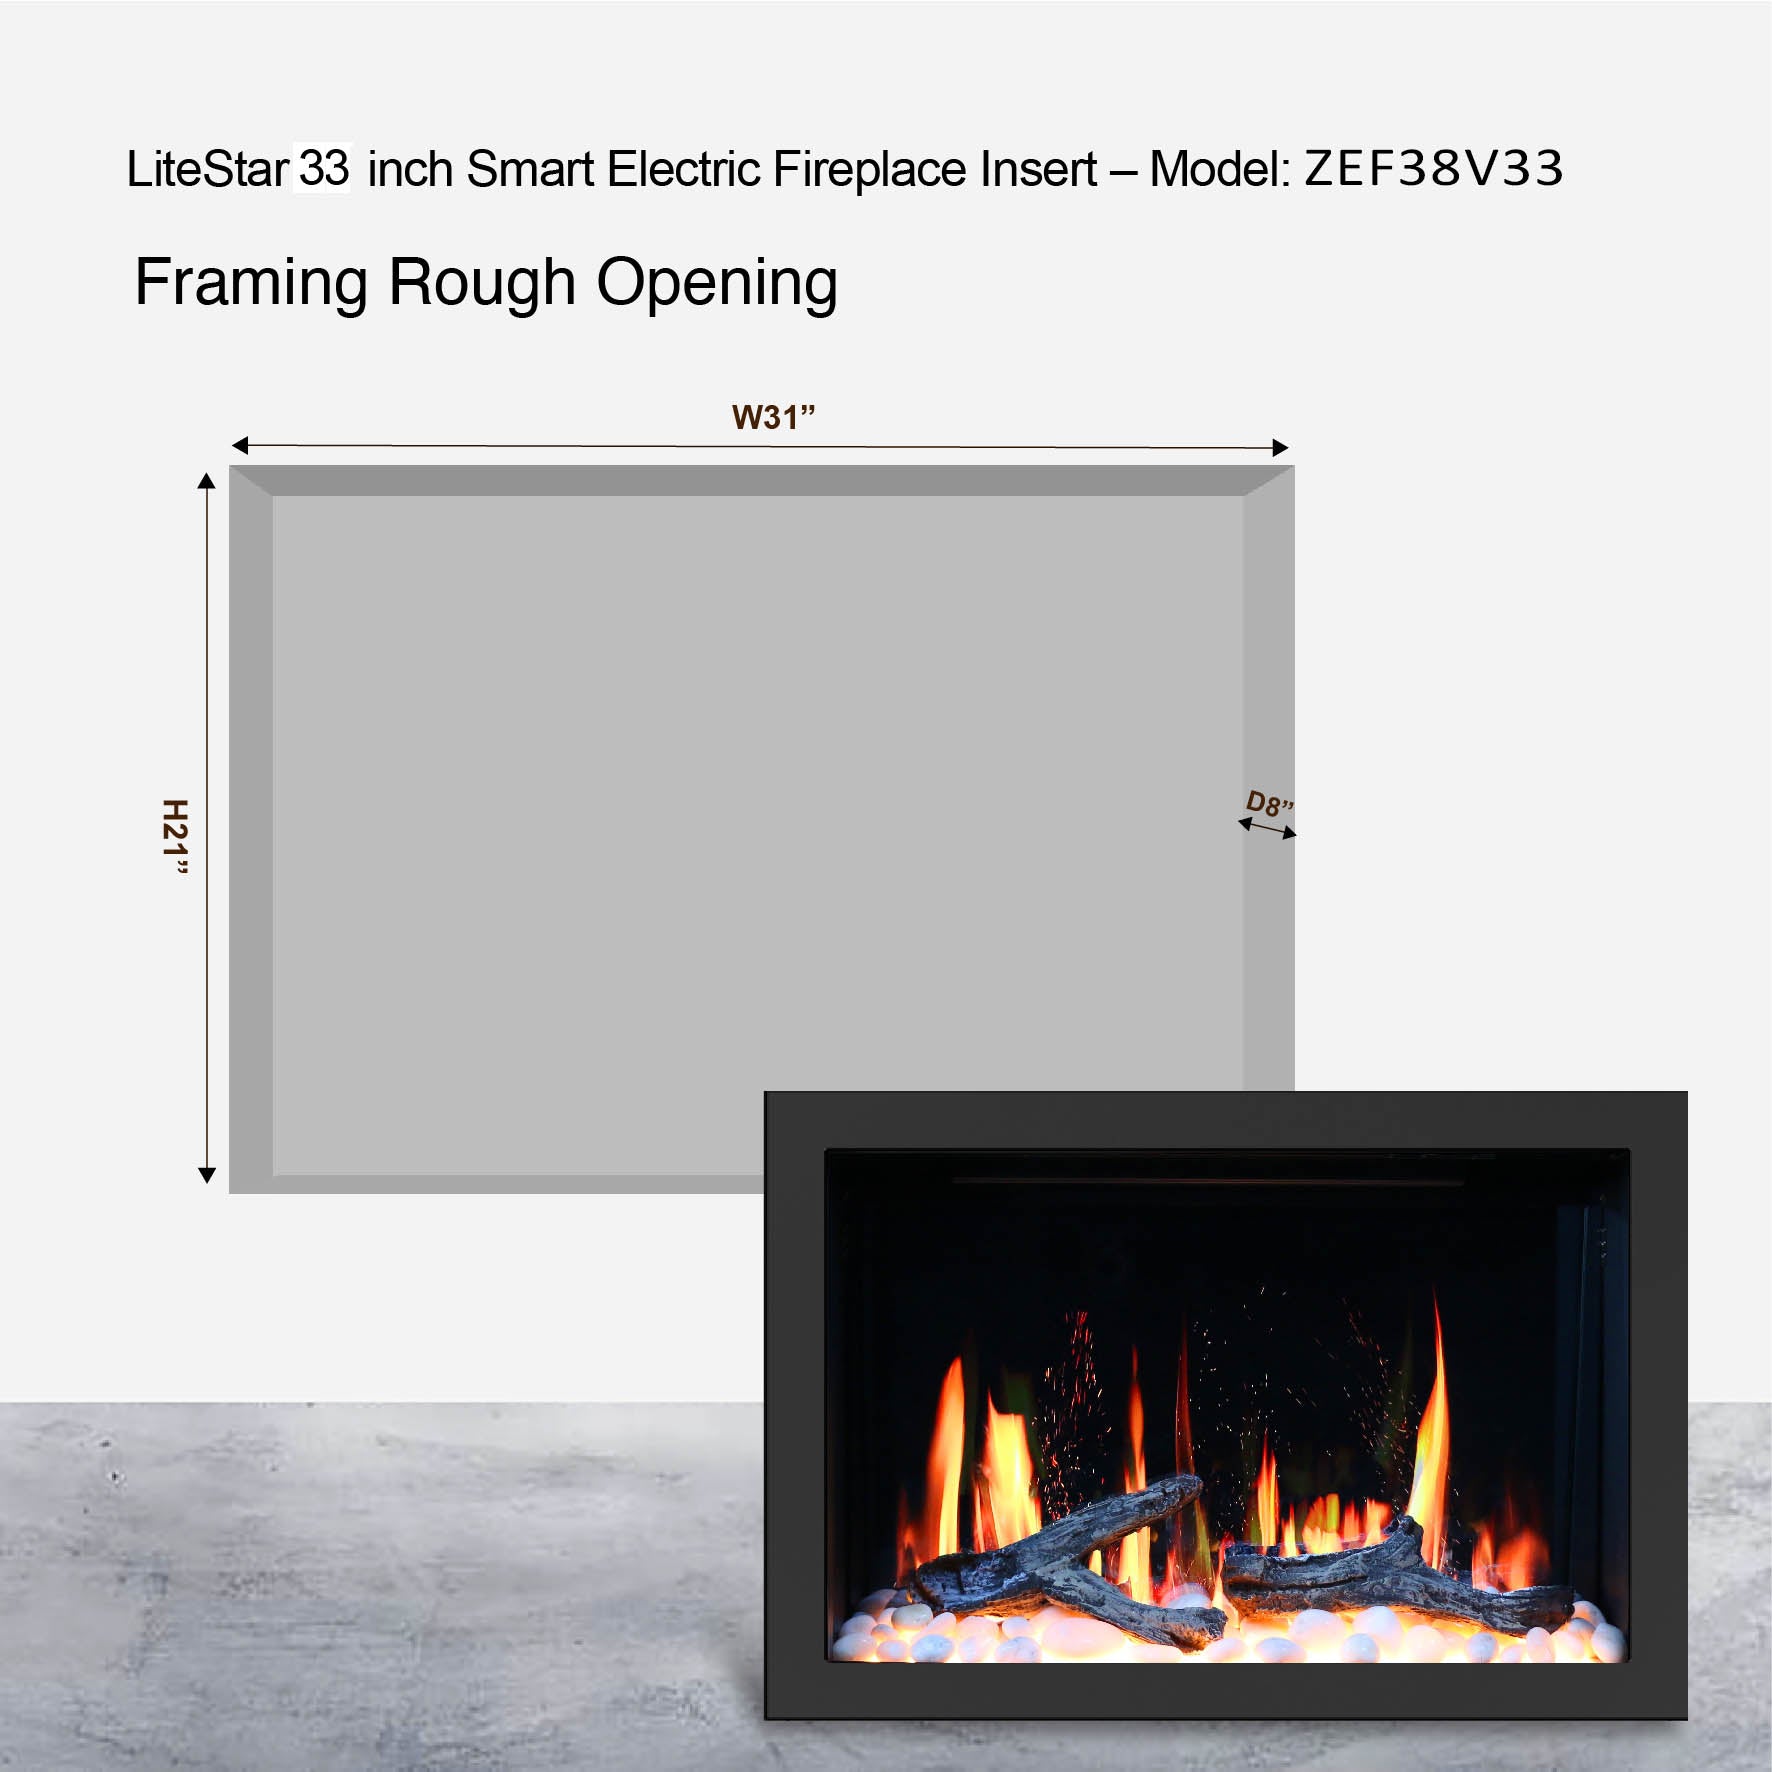 Litedeer LiteStar 33 inch Smart Electric Fireplace Inserts-ZEF38VC33-Framing